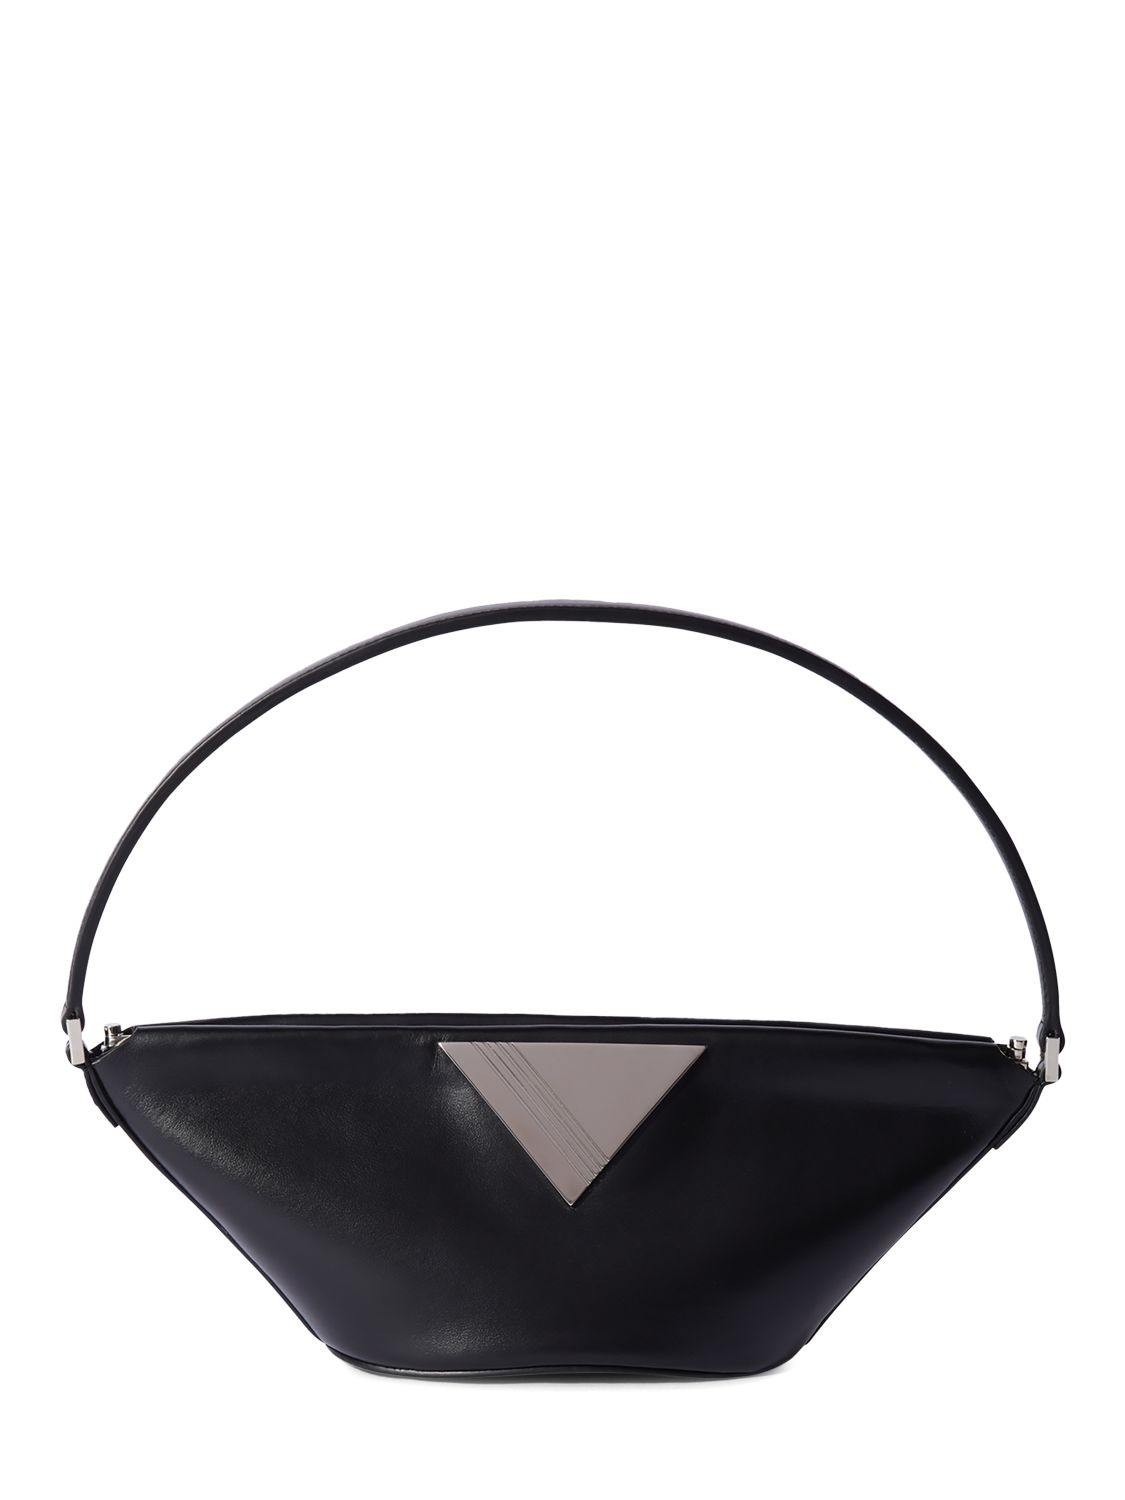 Attico Piccola Leather Shoulder Bag In Black